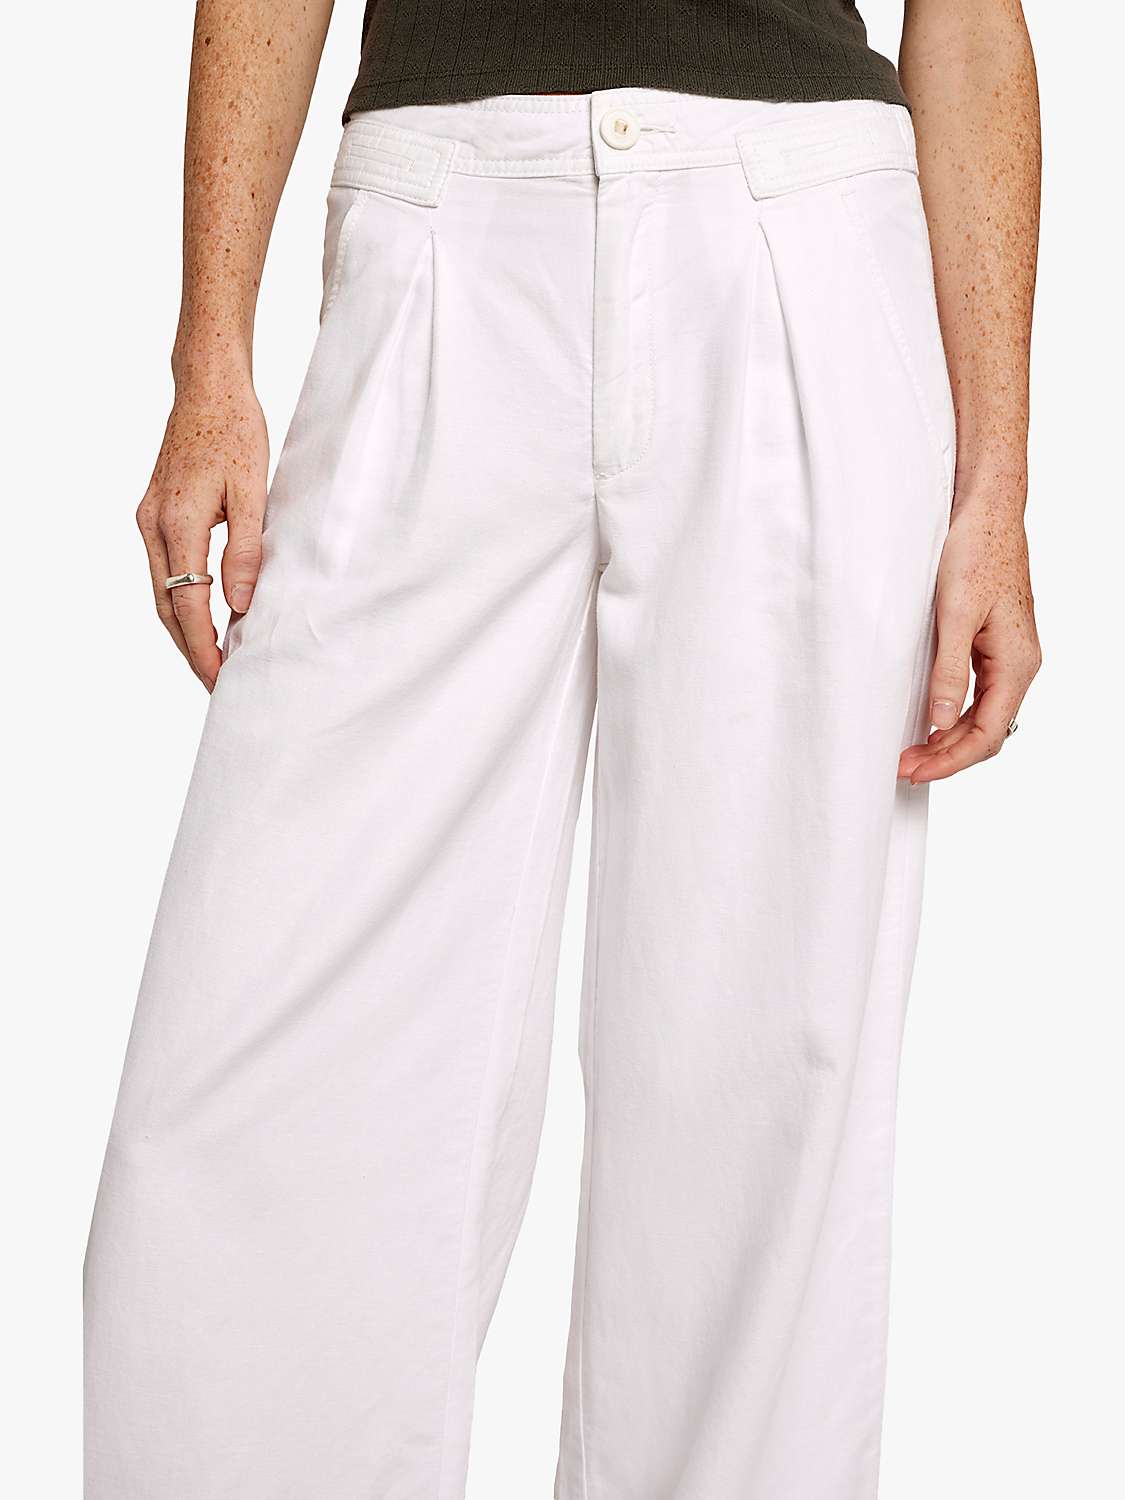 Buy Current/Elliott The Markey Linen Blend Wide Leg Trousers, White Online at johnlewis.com